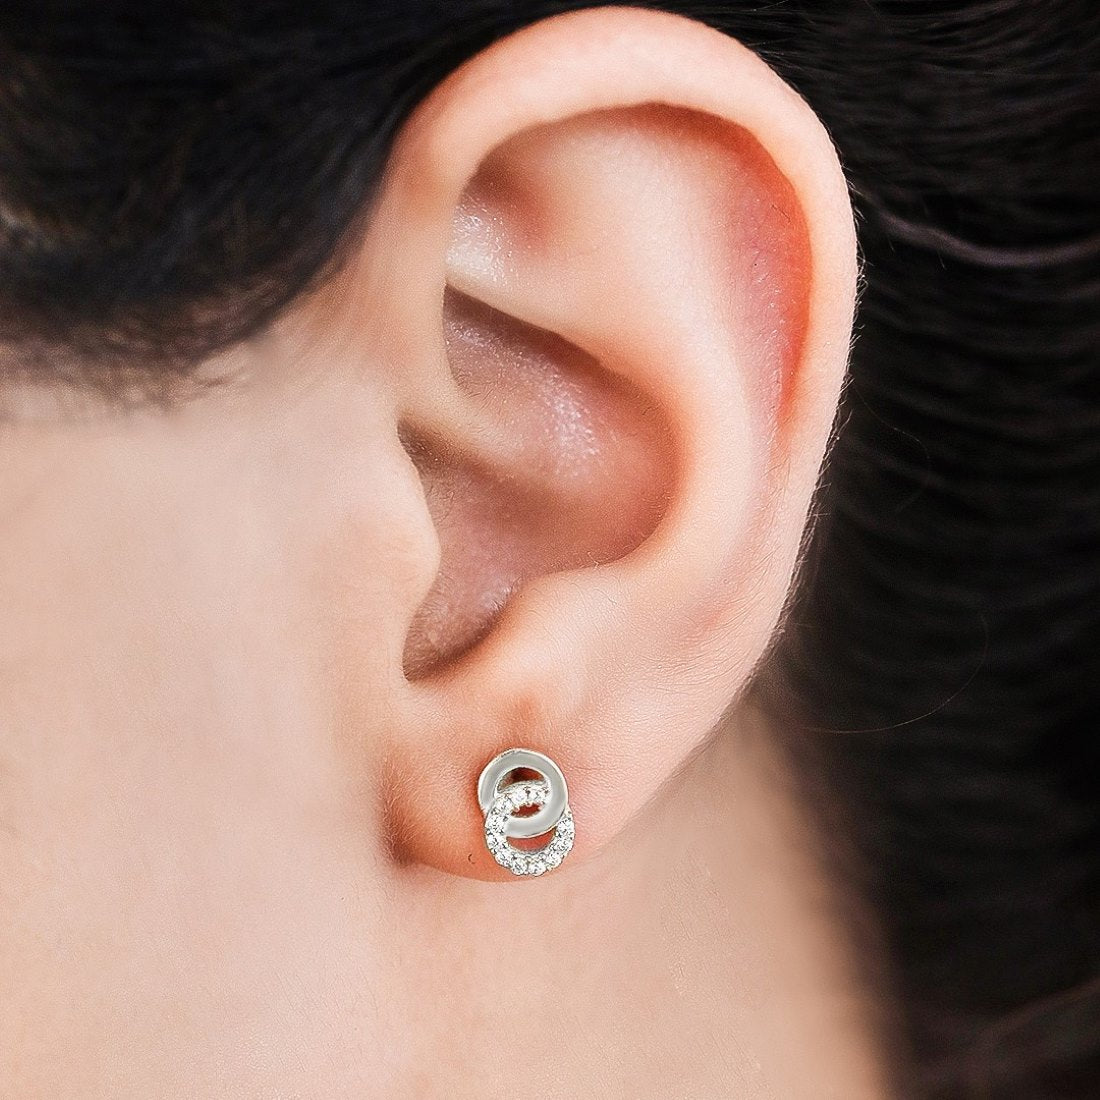 Eternal Sparkle 925 Sterling Silver Rhodium-Plated Infinity Earrings